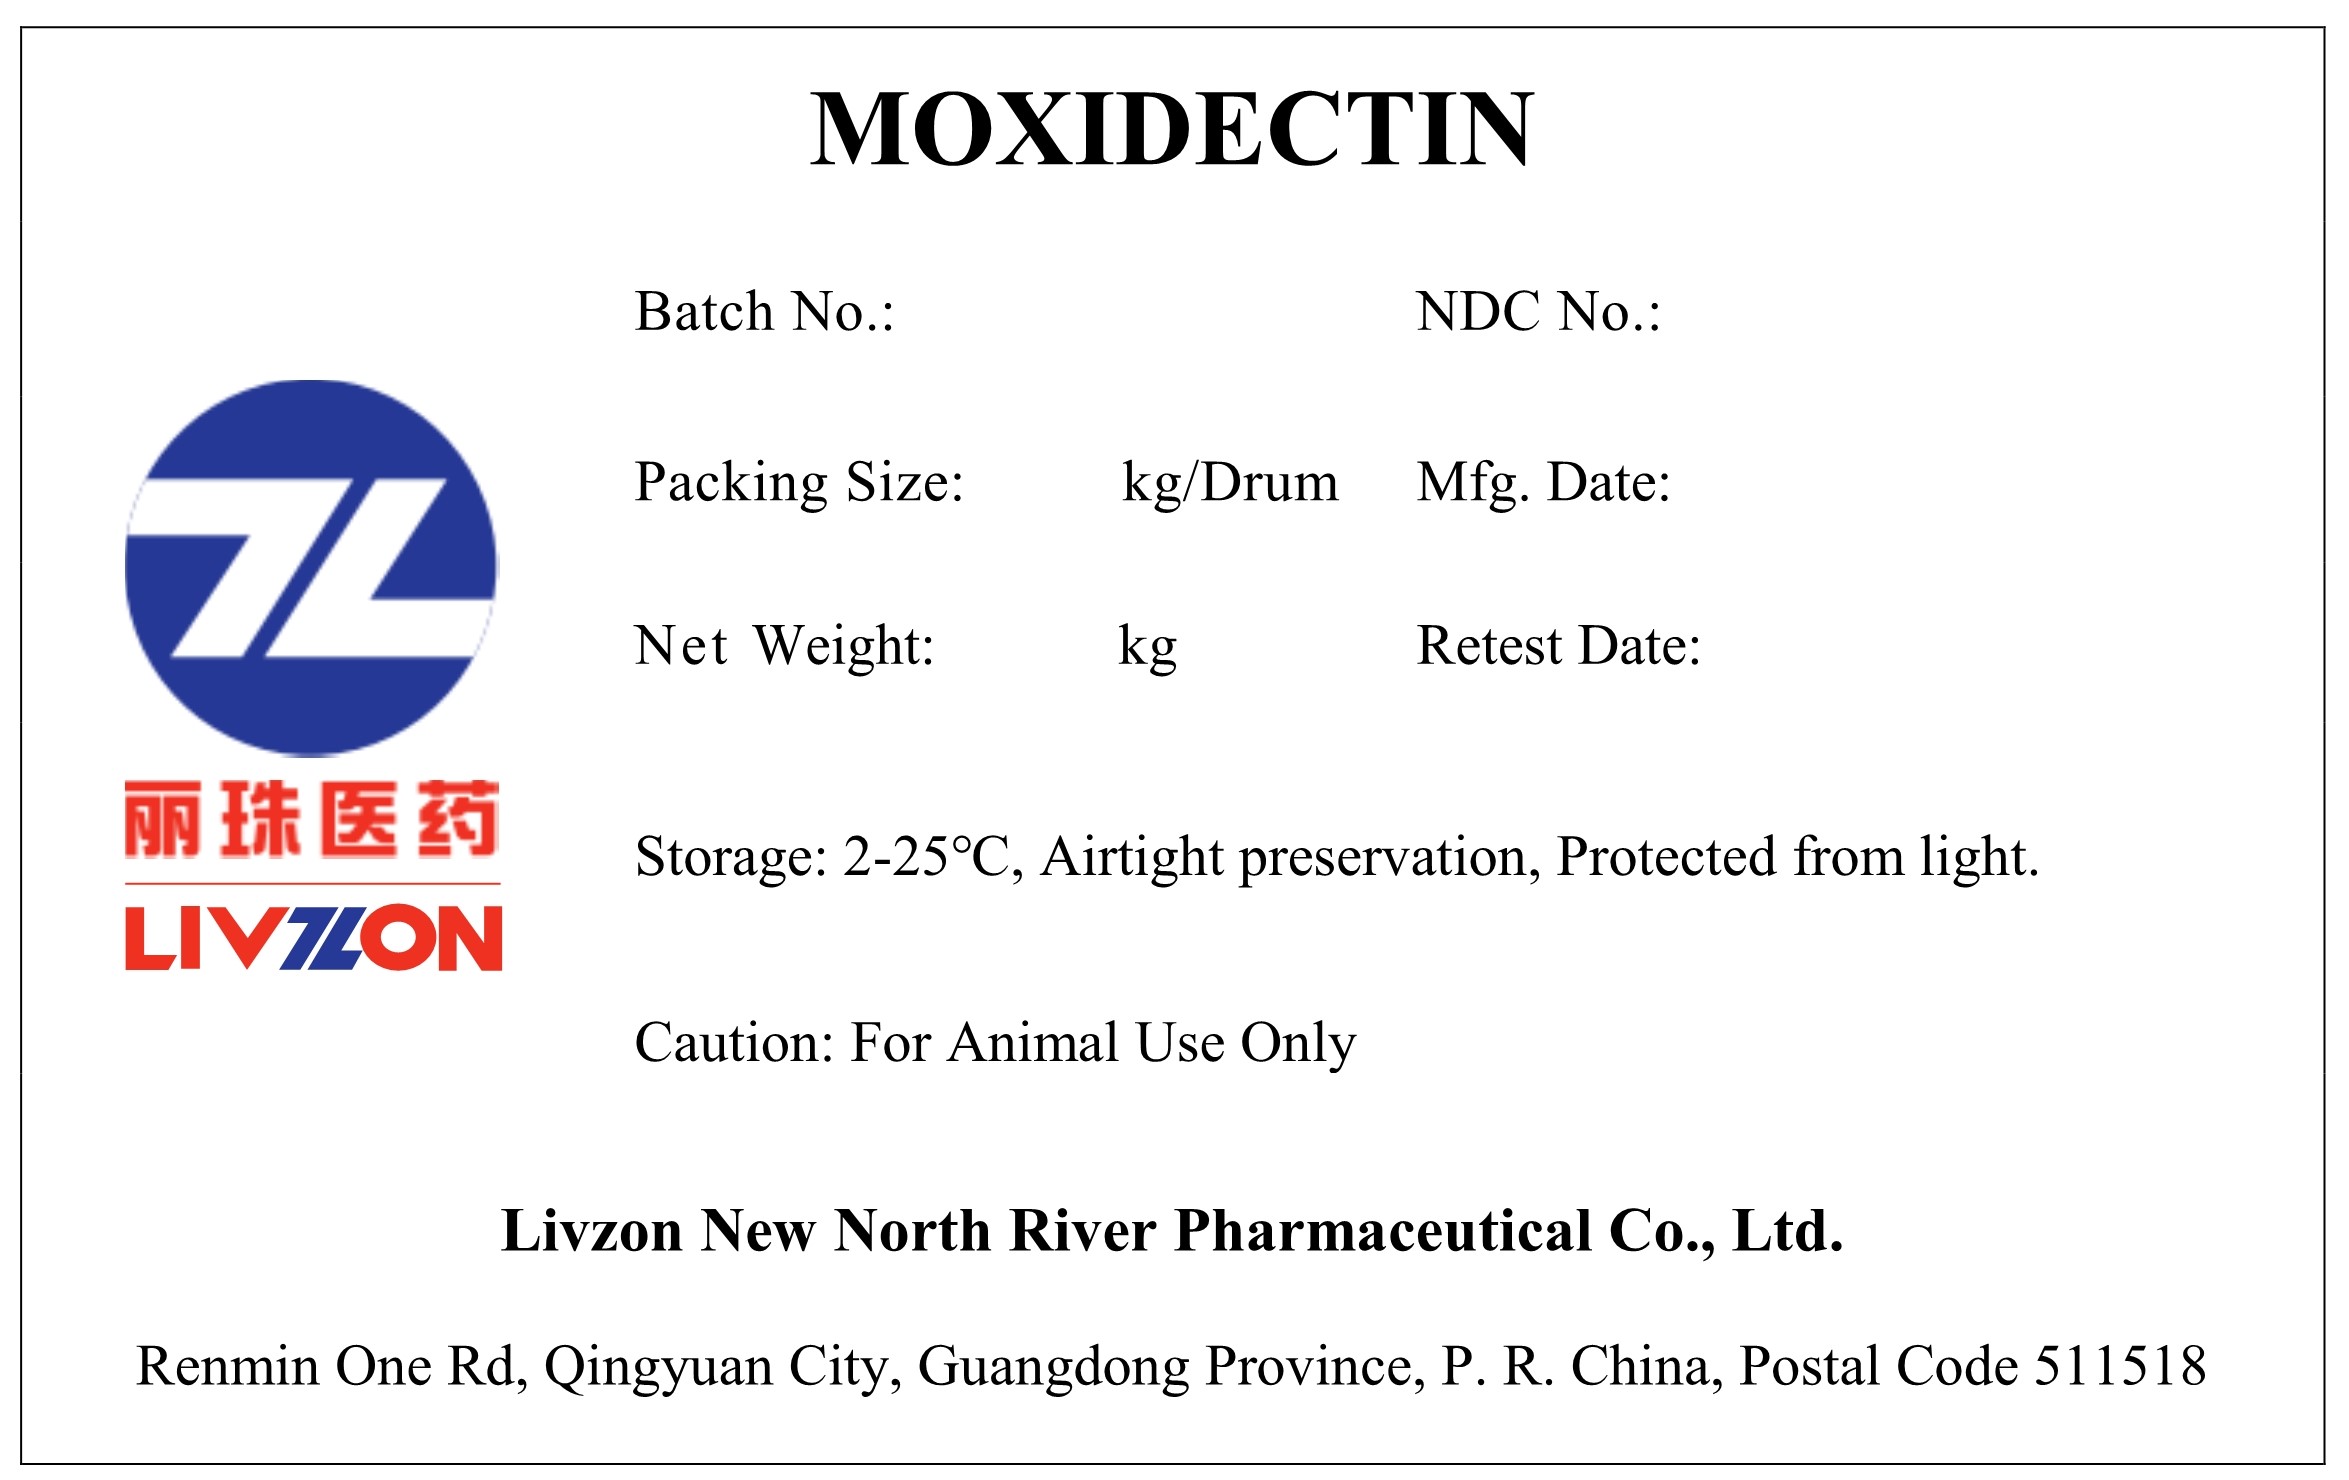 Moxidectin label